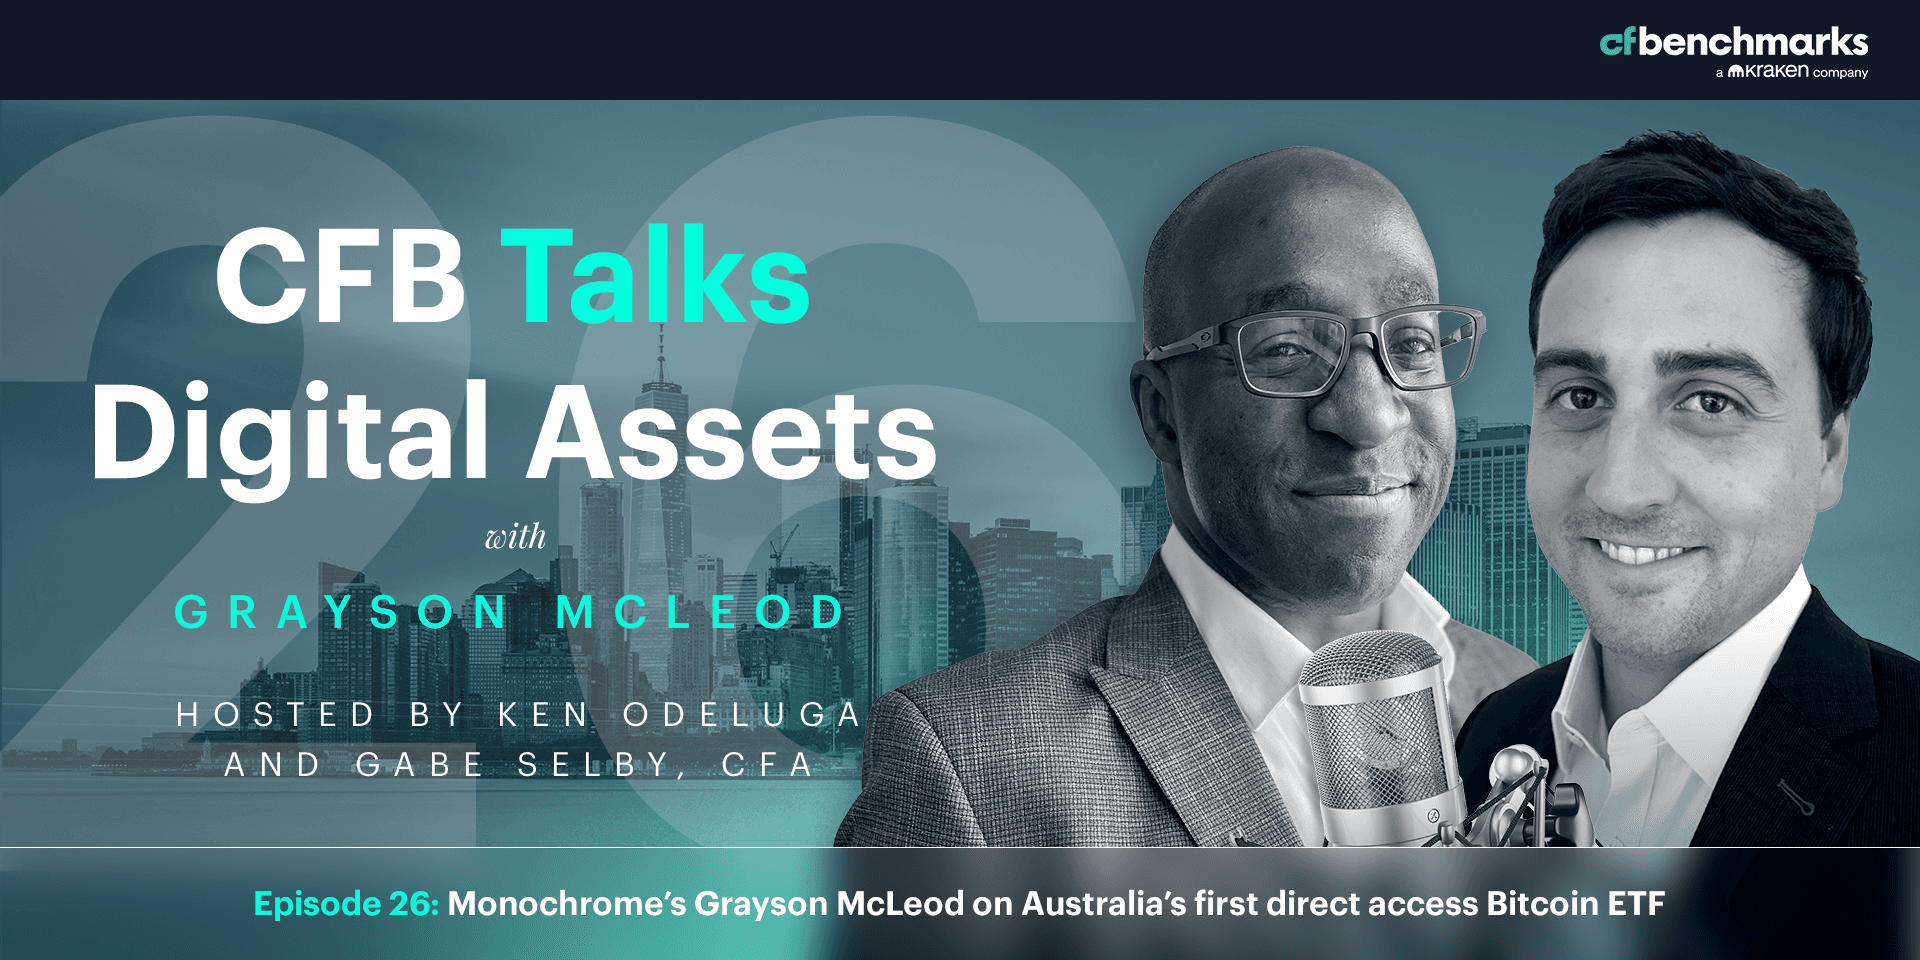 CFB Talks Digital Assets Episode 26: Monochrome's Grayson McLeod on Australia's first direct access Bitcoin ETF